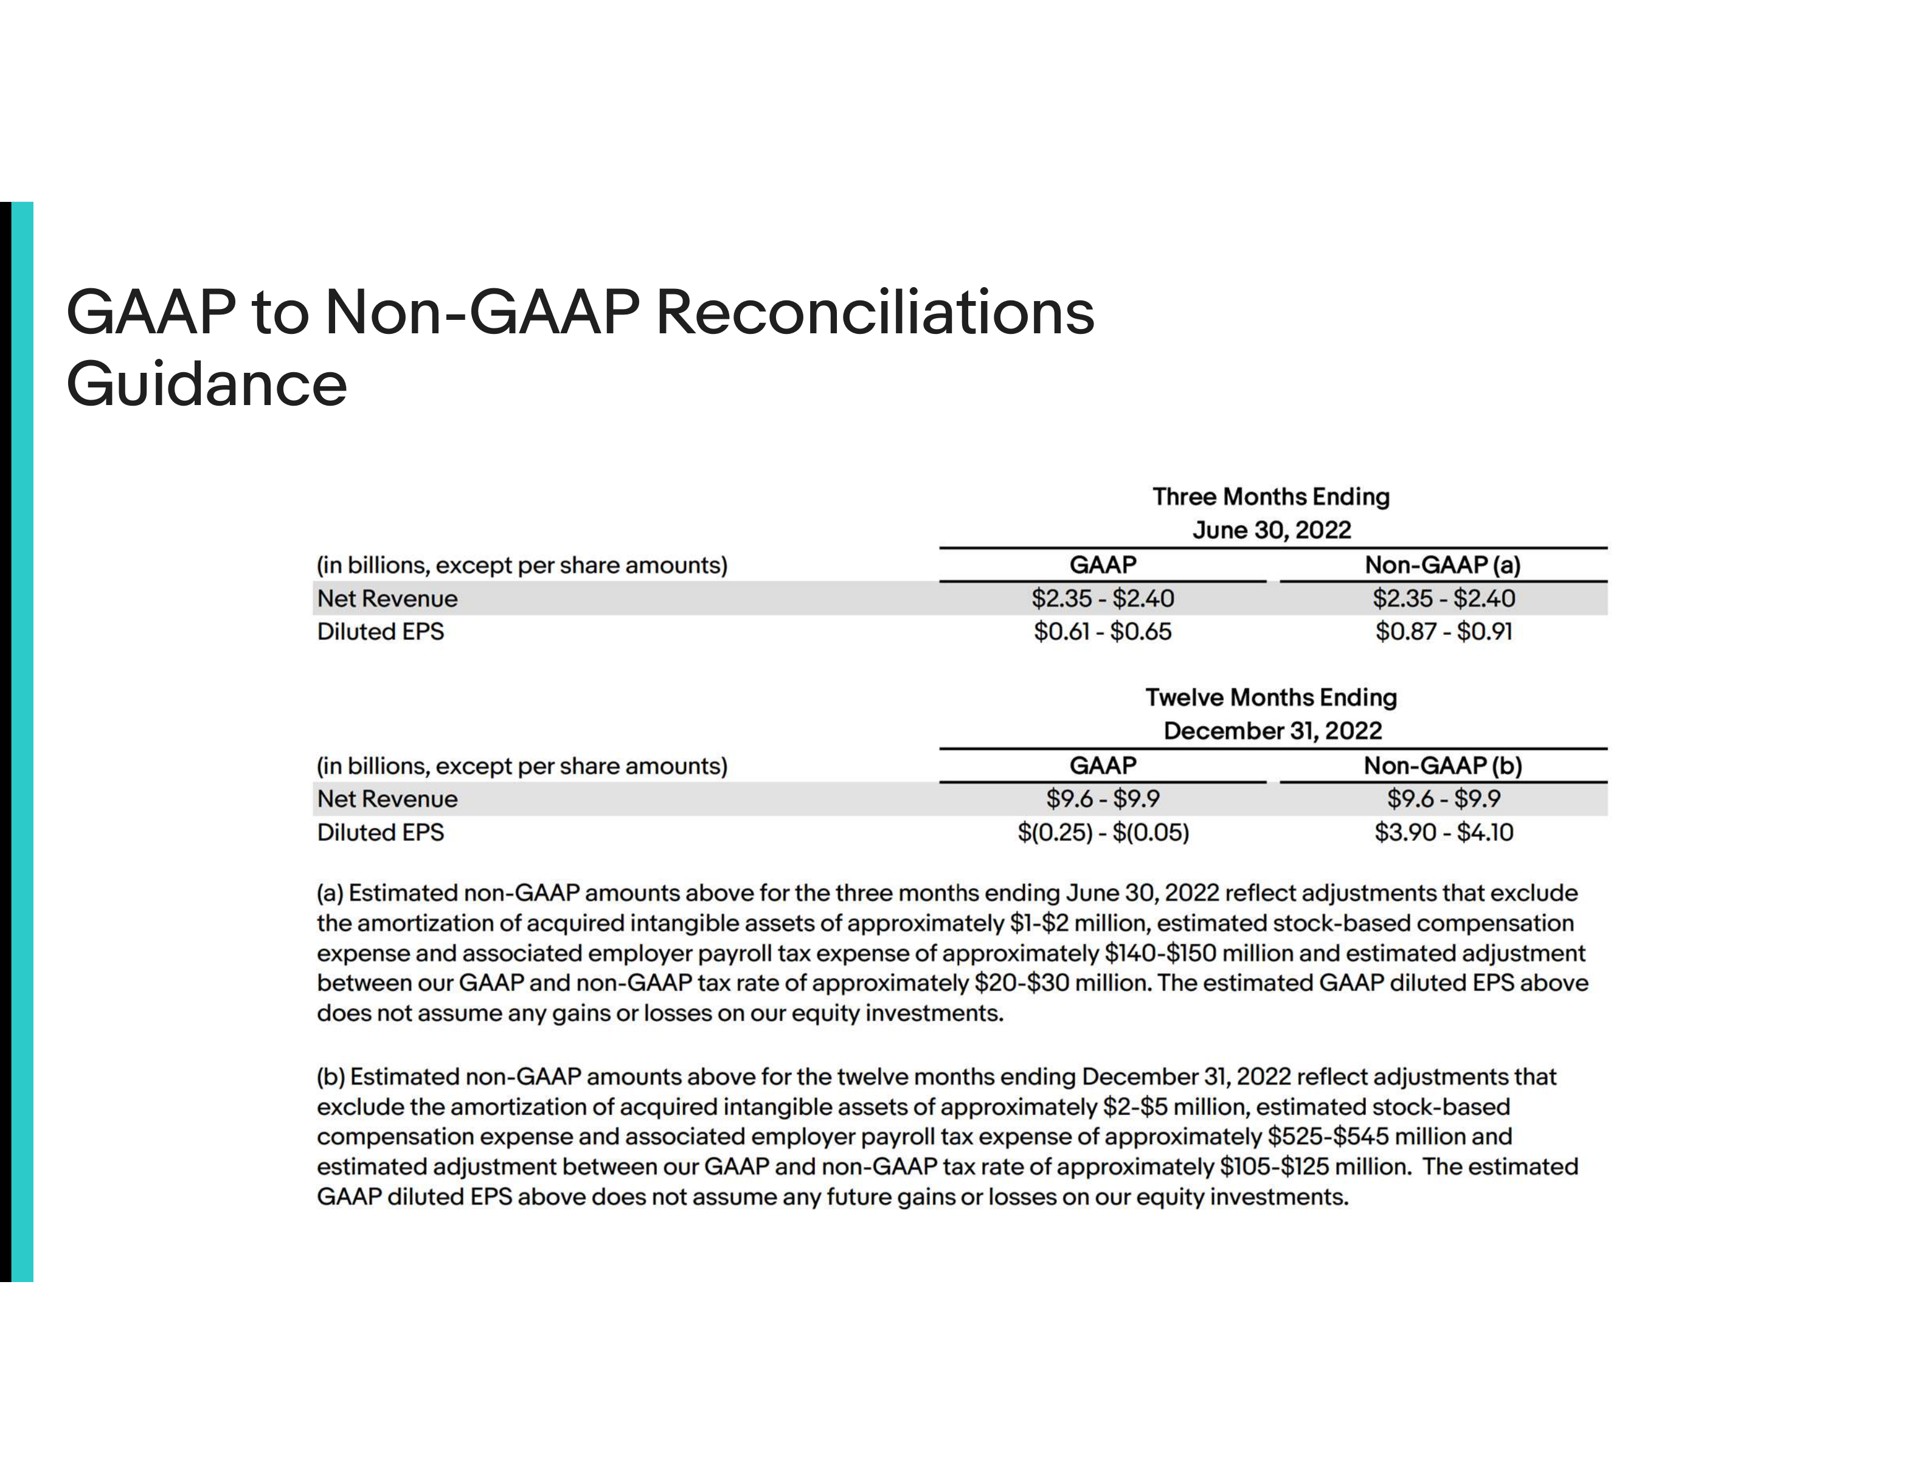 to non reconciliations guidance | eBay